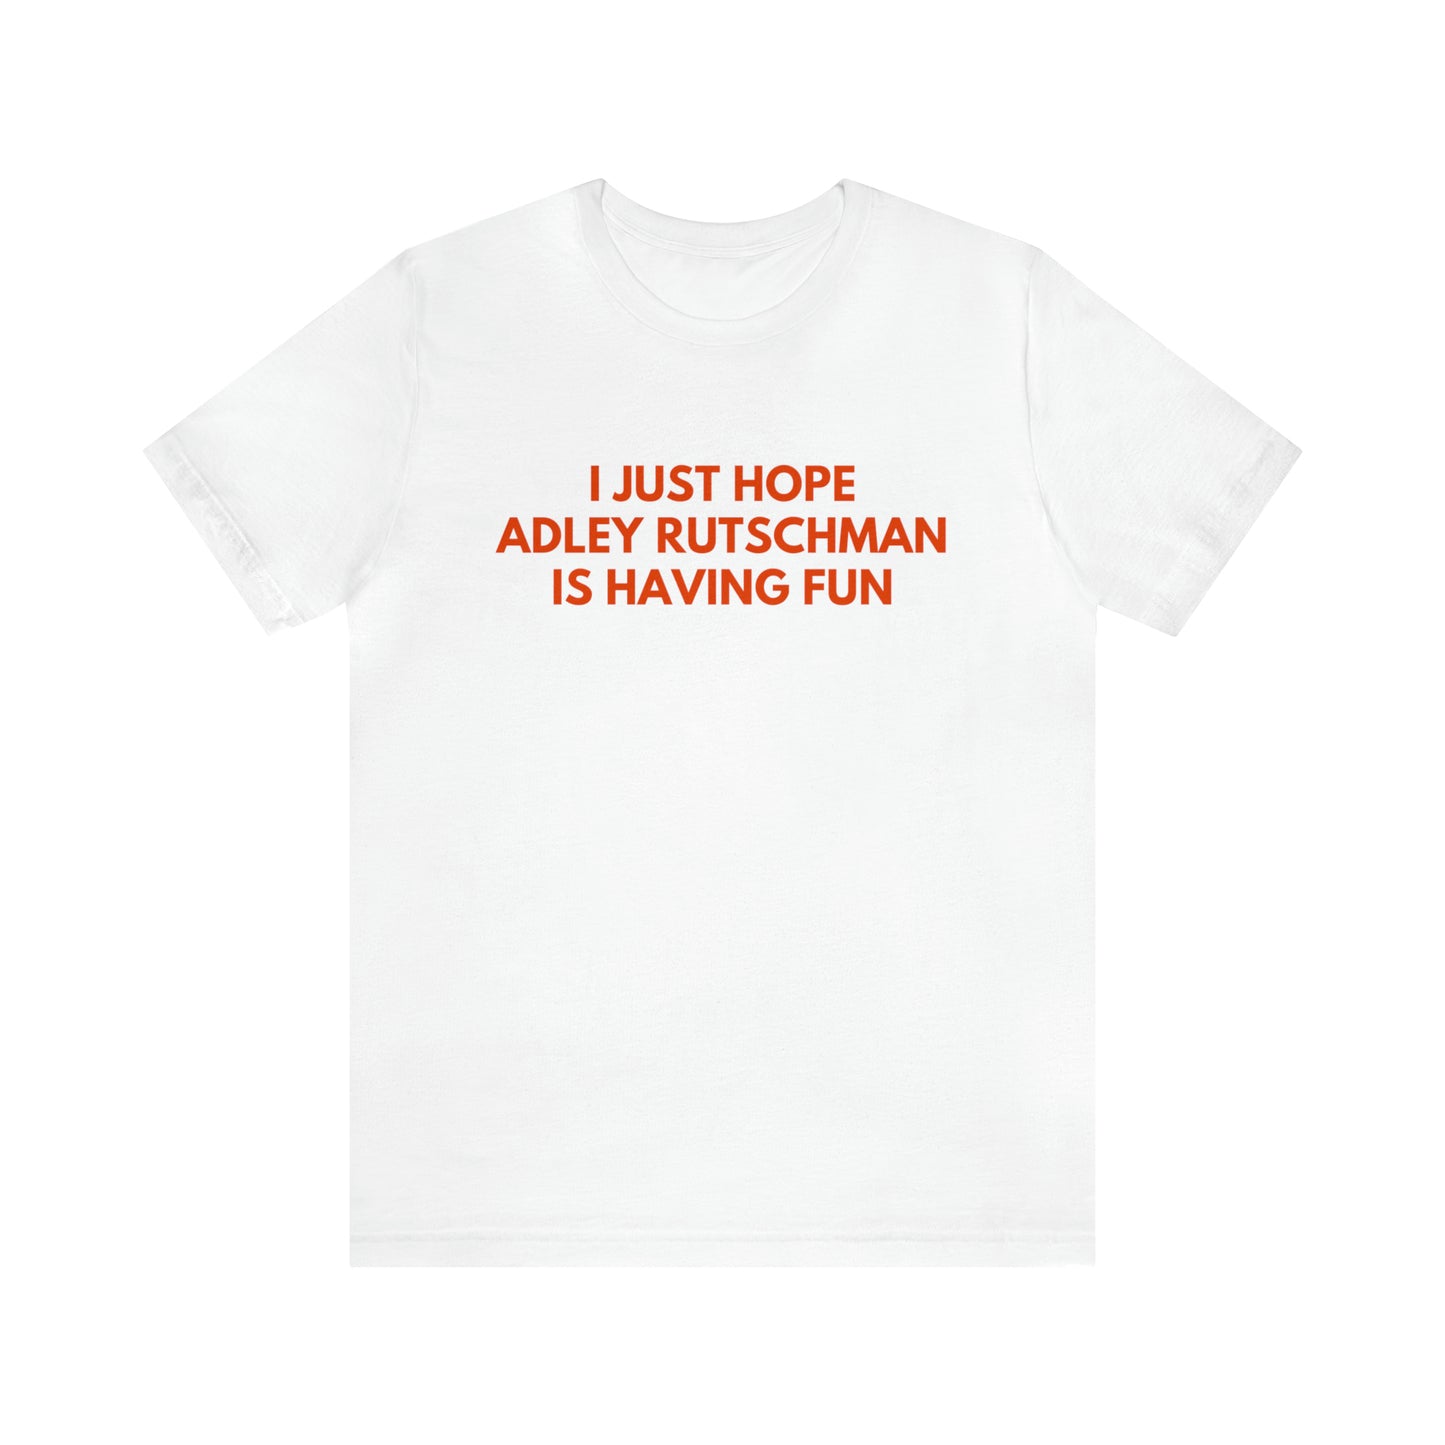 Adley Rutschman Having Fun - Unisex T-shirt